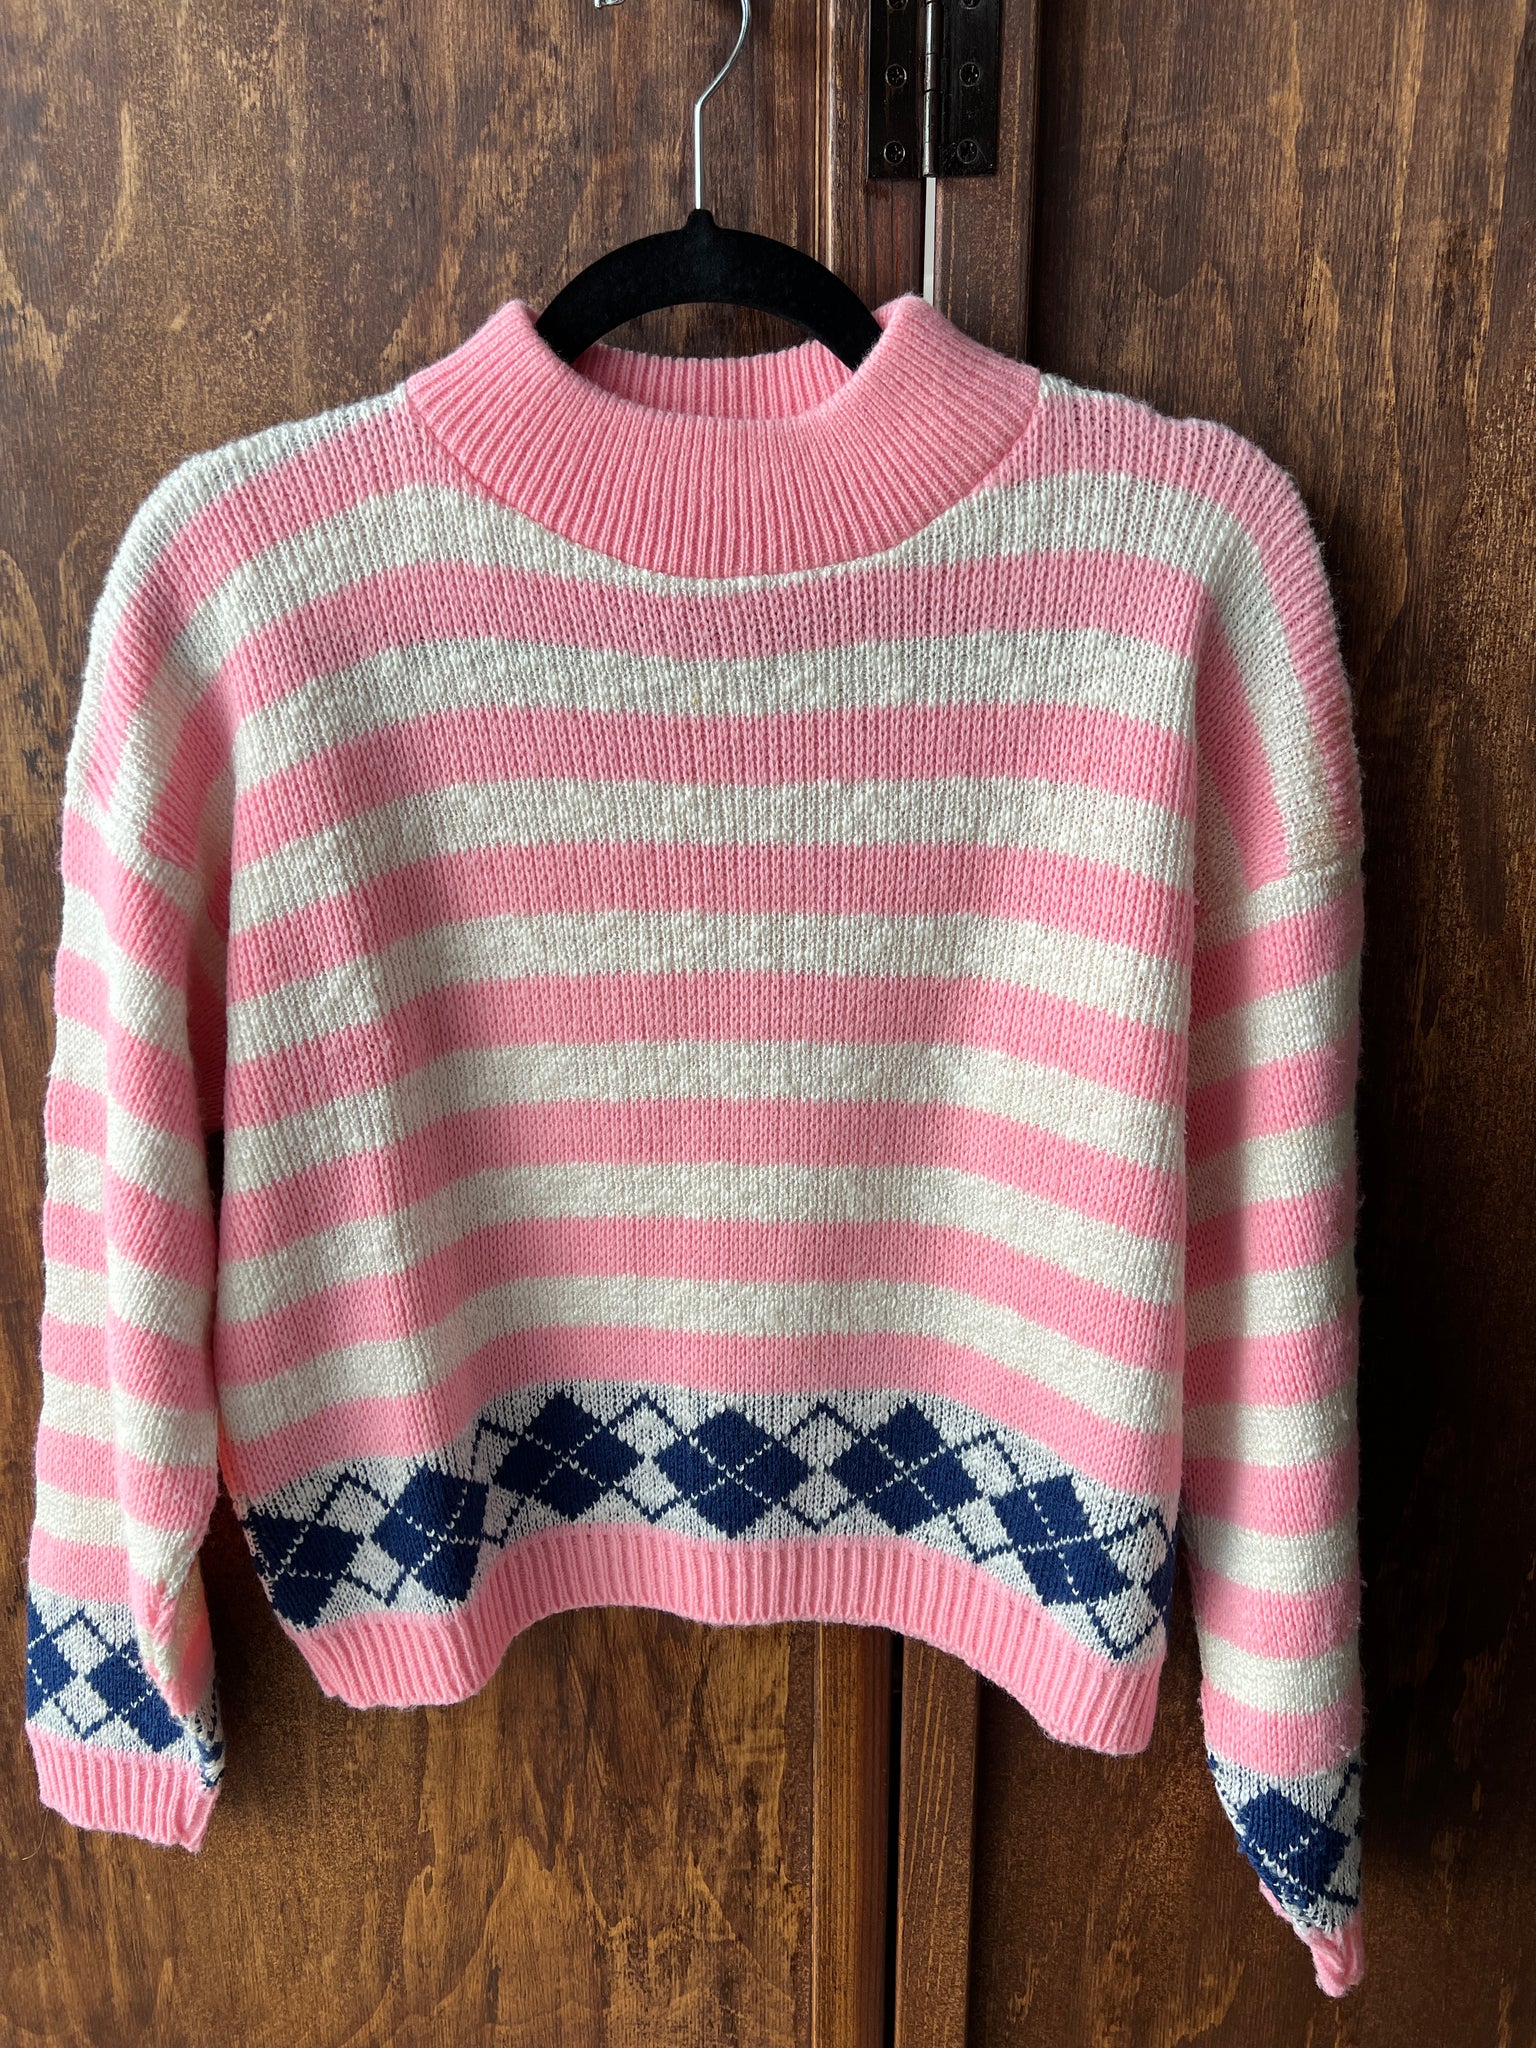 1980s SWEATER- Weathered Blues pink stripe w/ argyle